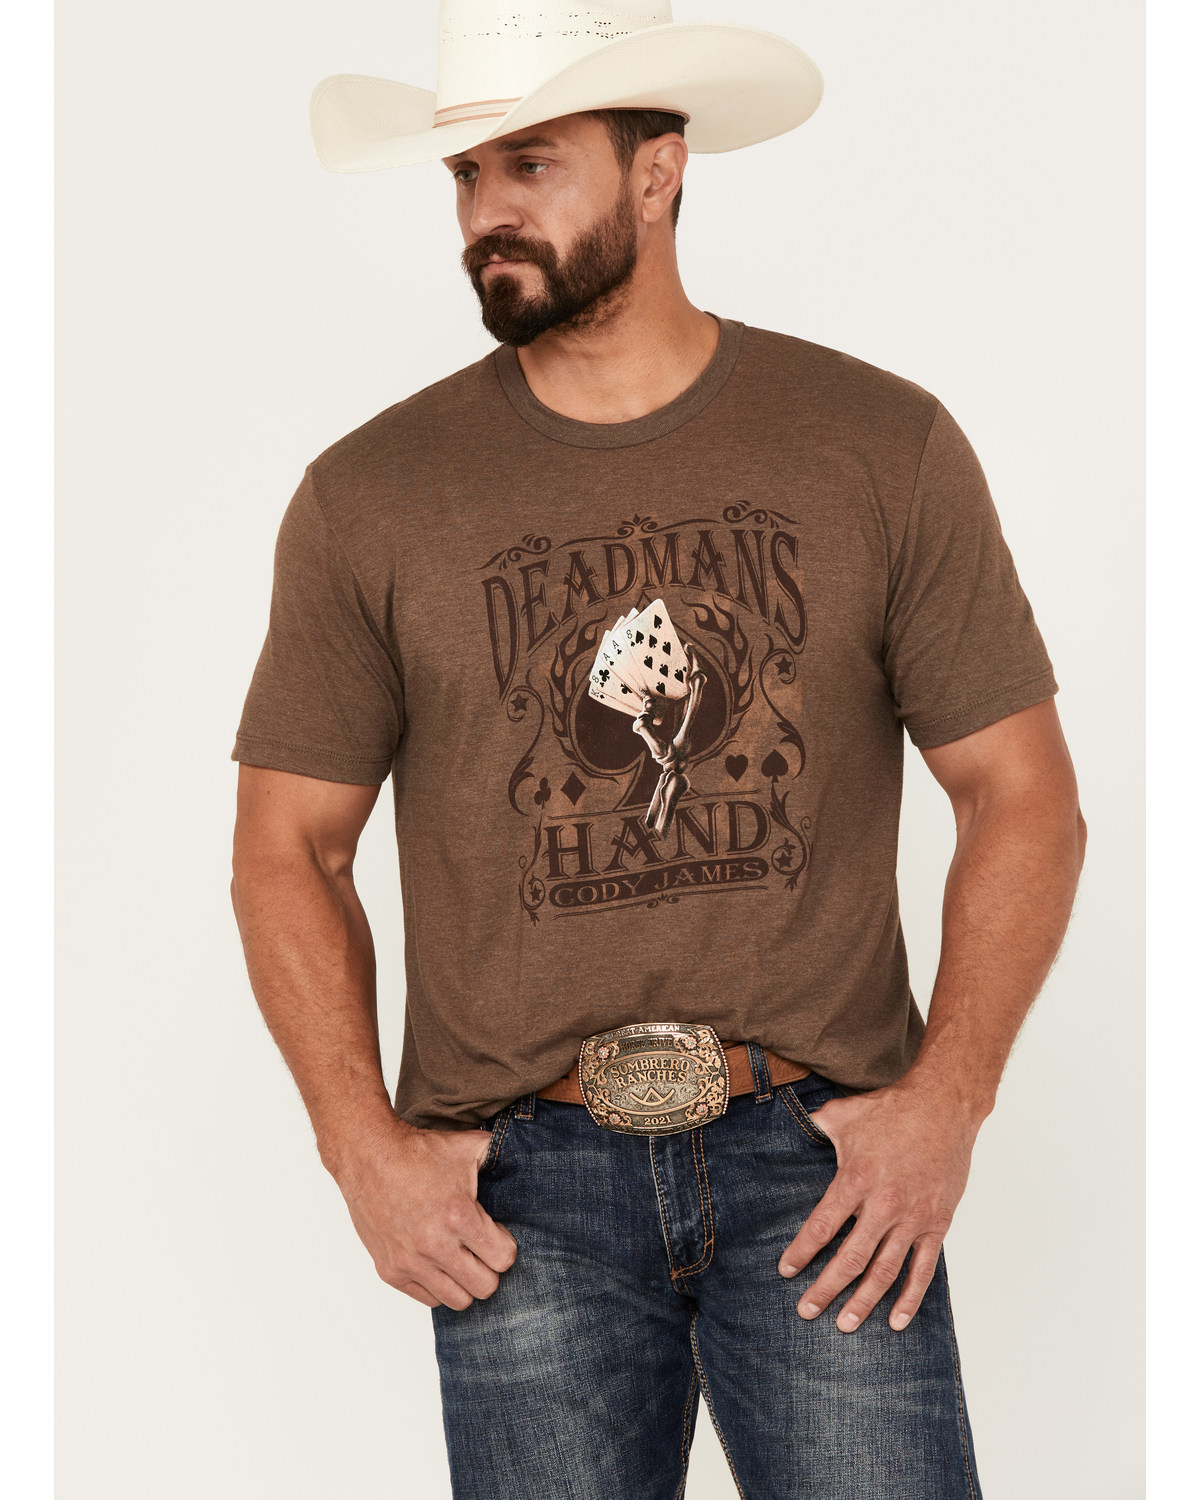 Cody James Men's Deadmans Hand Short Sleeve Graphic T-Shirt